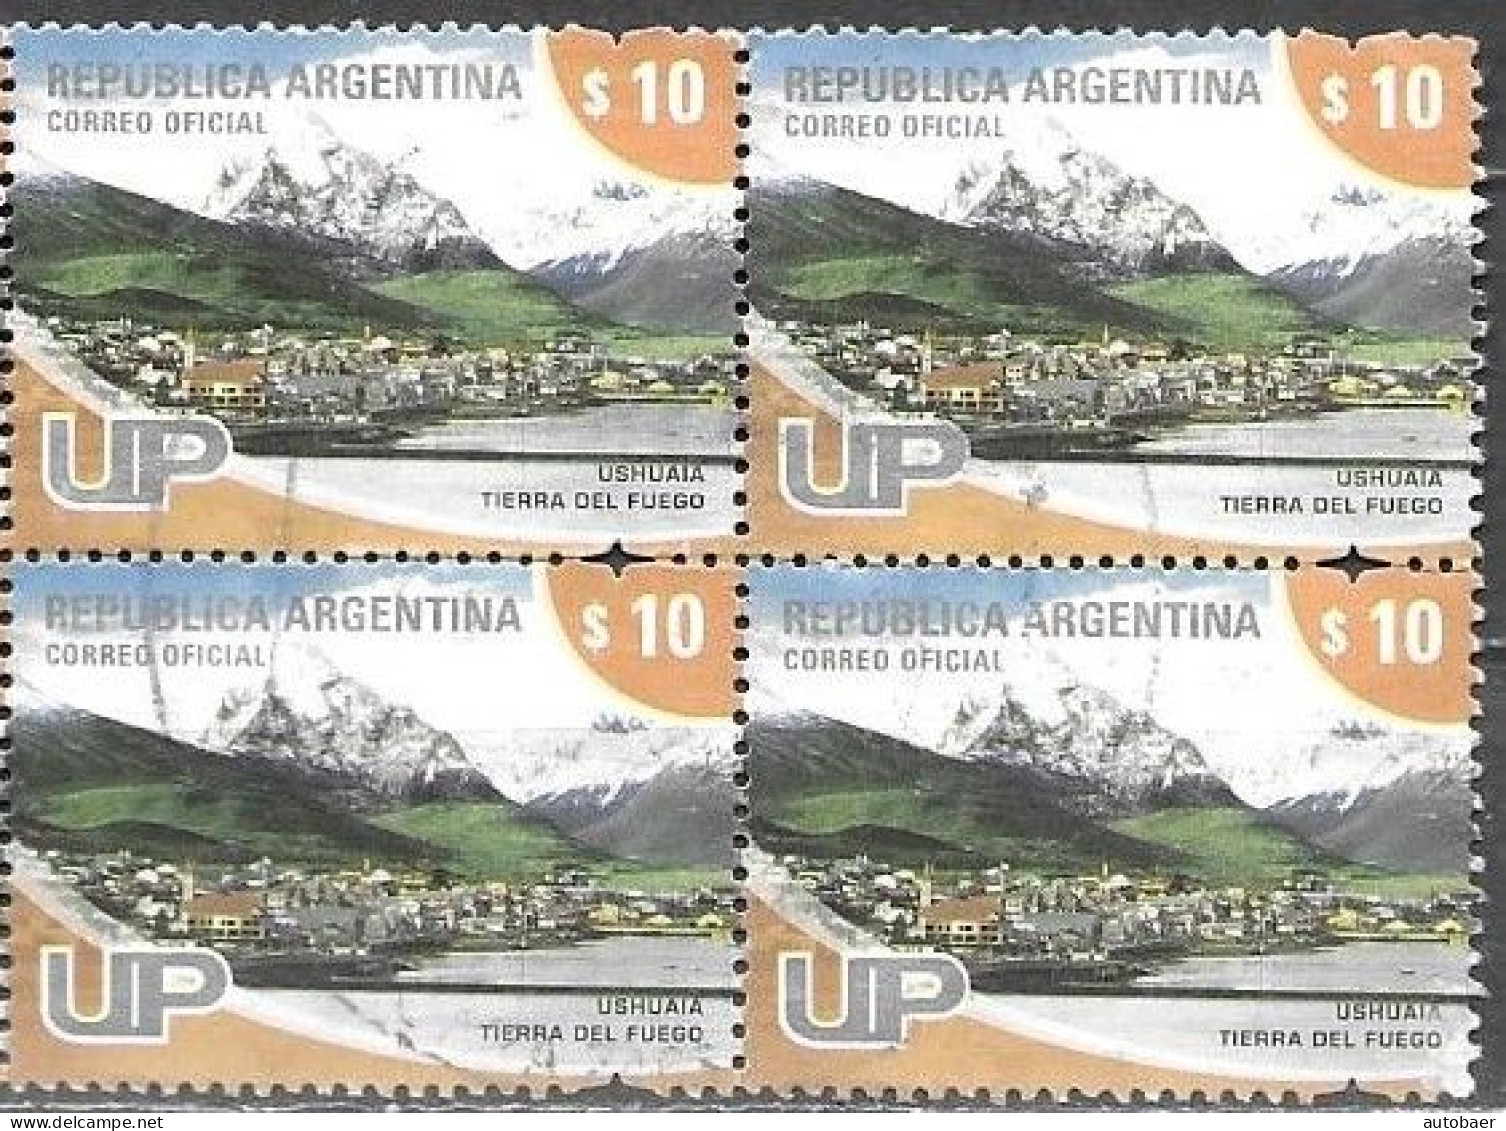 Argentina 2008 Definitives U.P. UP Tourism Ushuaia Mi. 3230A Bloc Of 4 Used Cancelled Gestempelt Oblitéré - Gebruikt